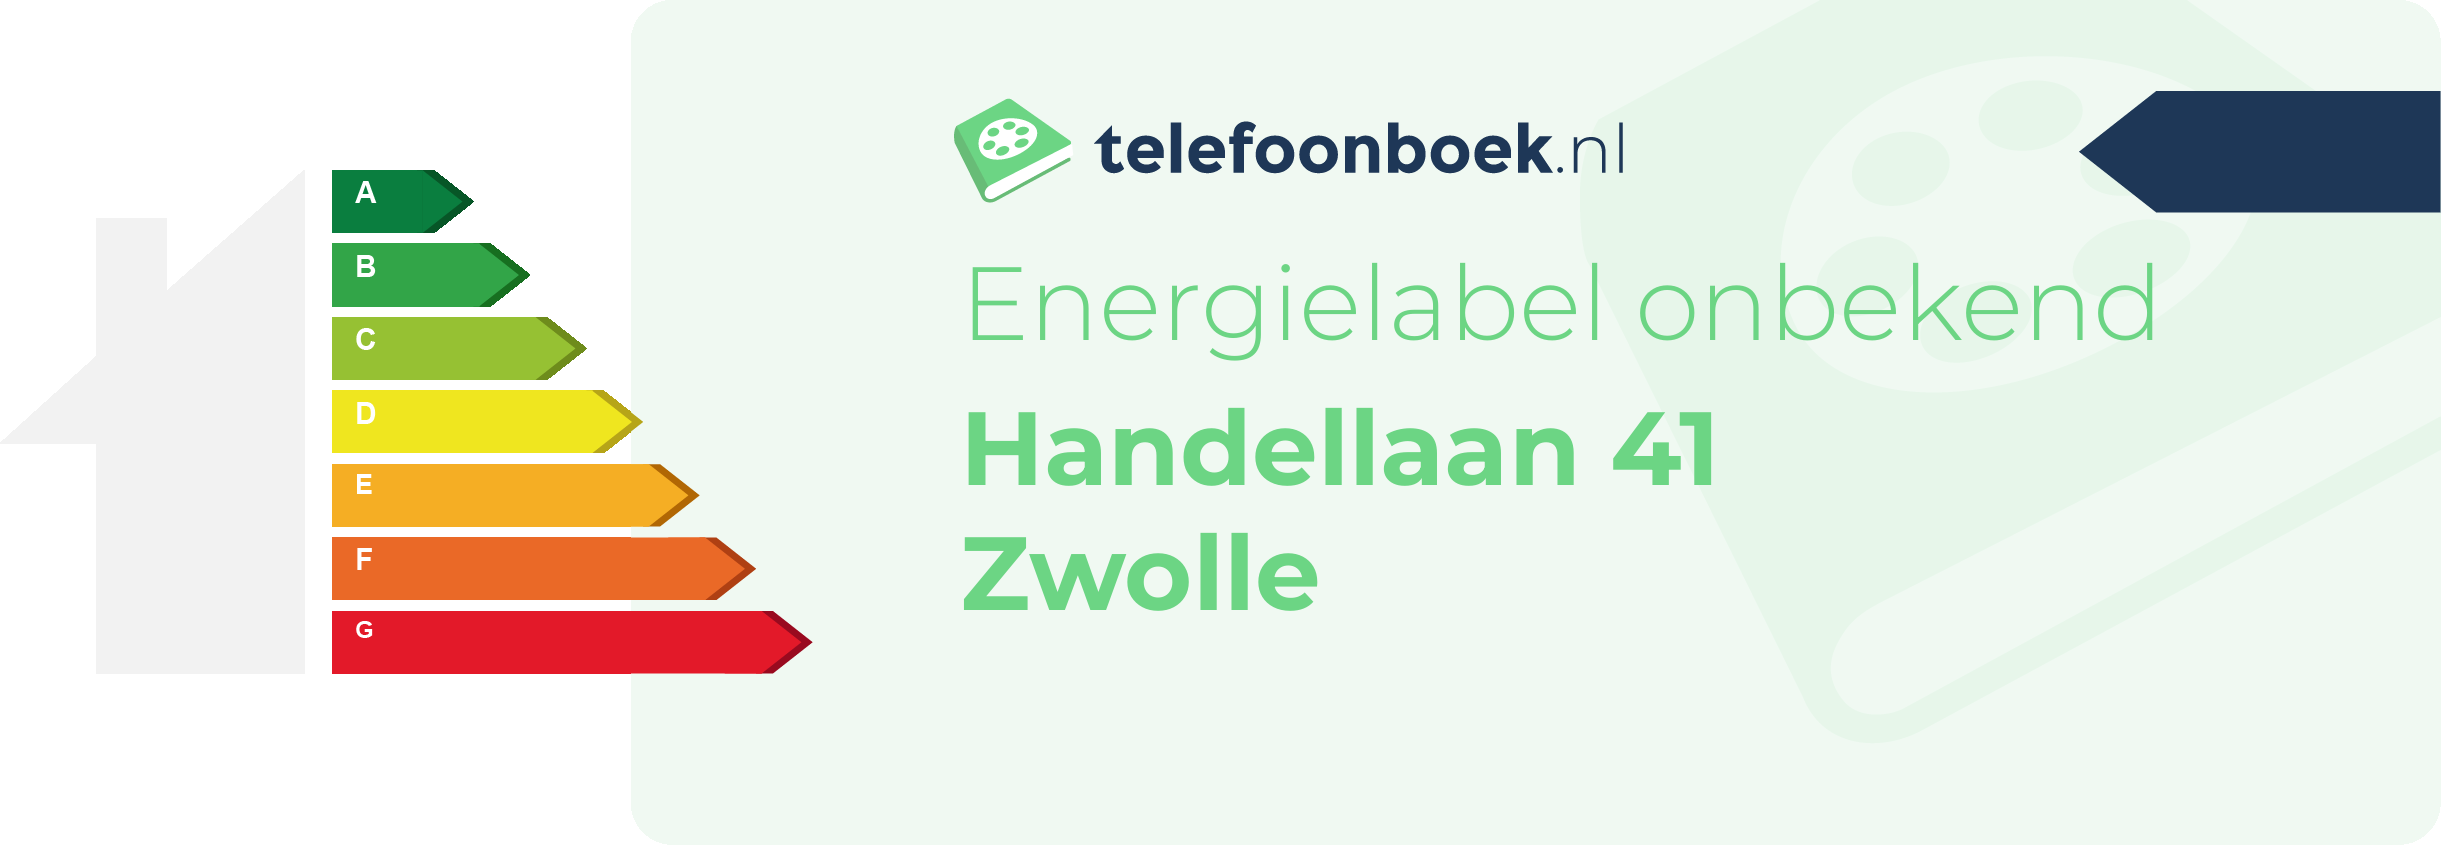 Energielabel Handellaan 41 Zwolle